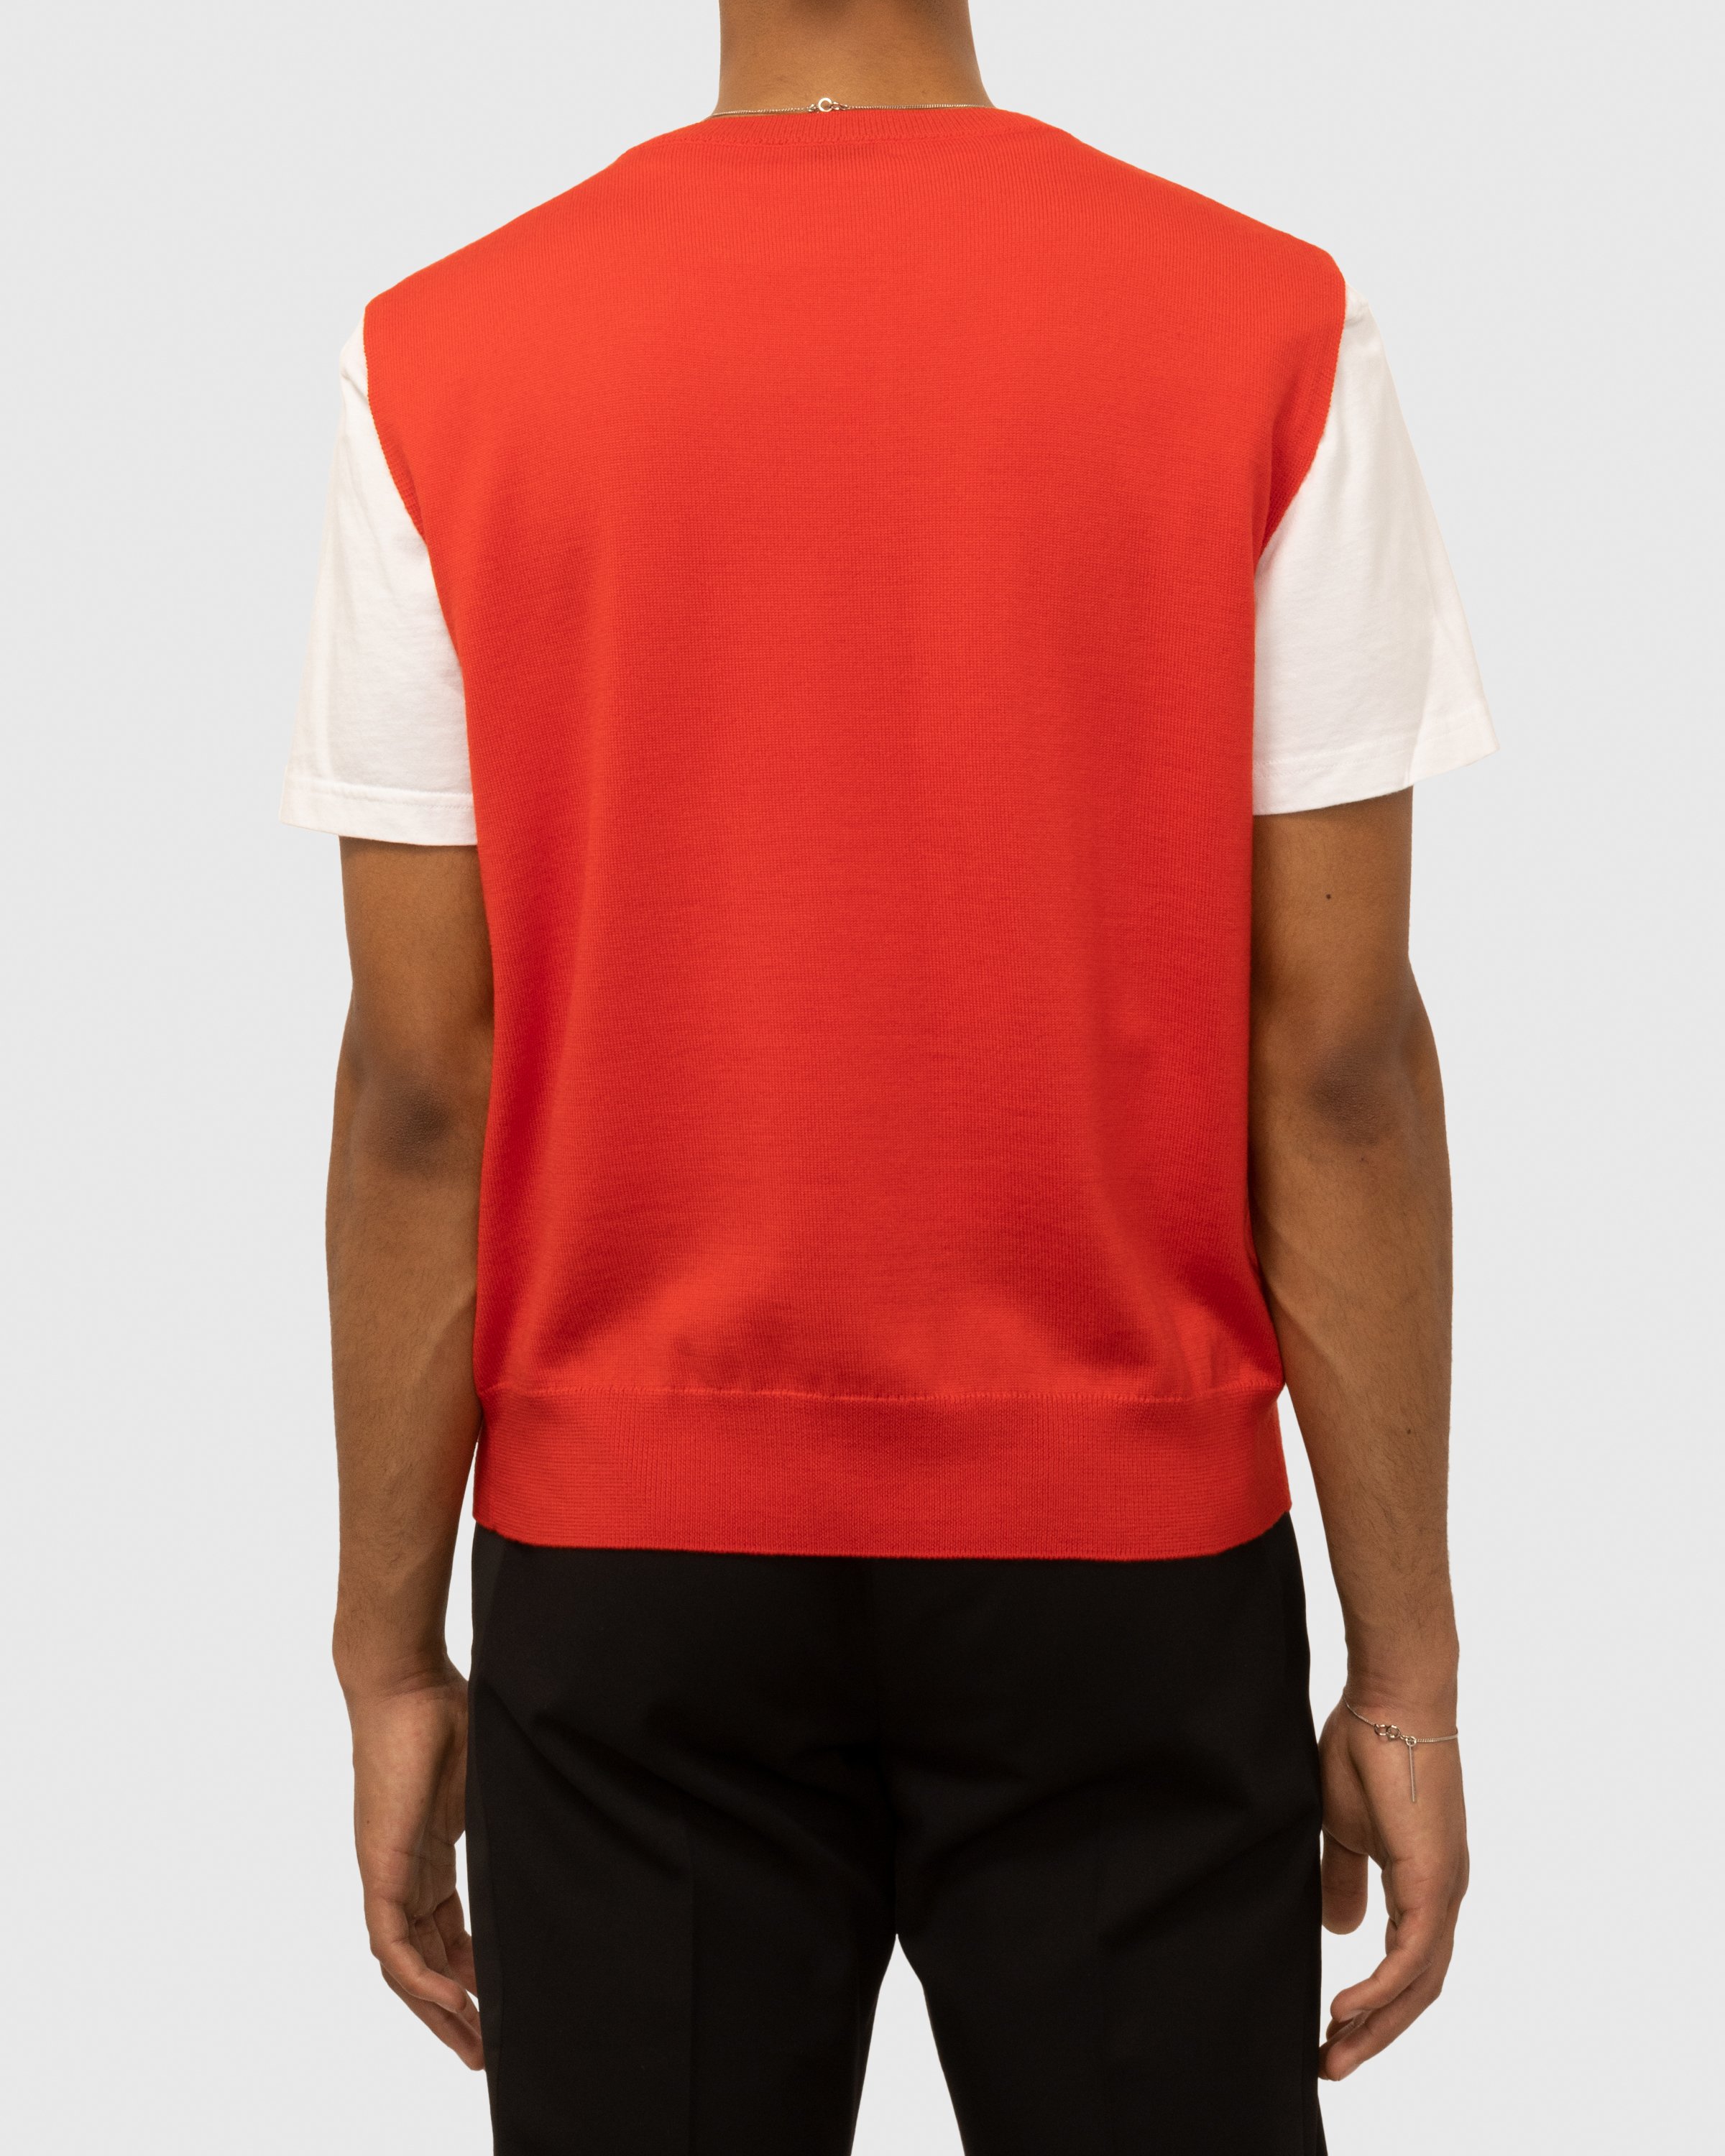 Dries van Noten - Neptune Sweater Vest Red - Clothing - Red - Image 3